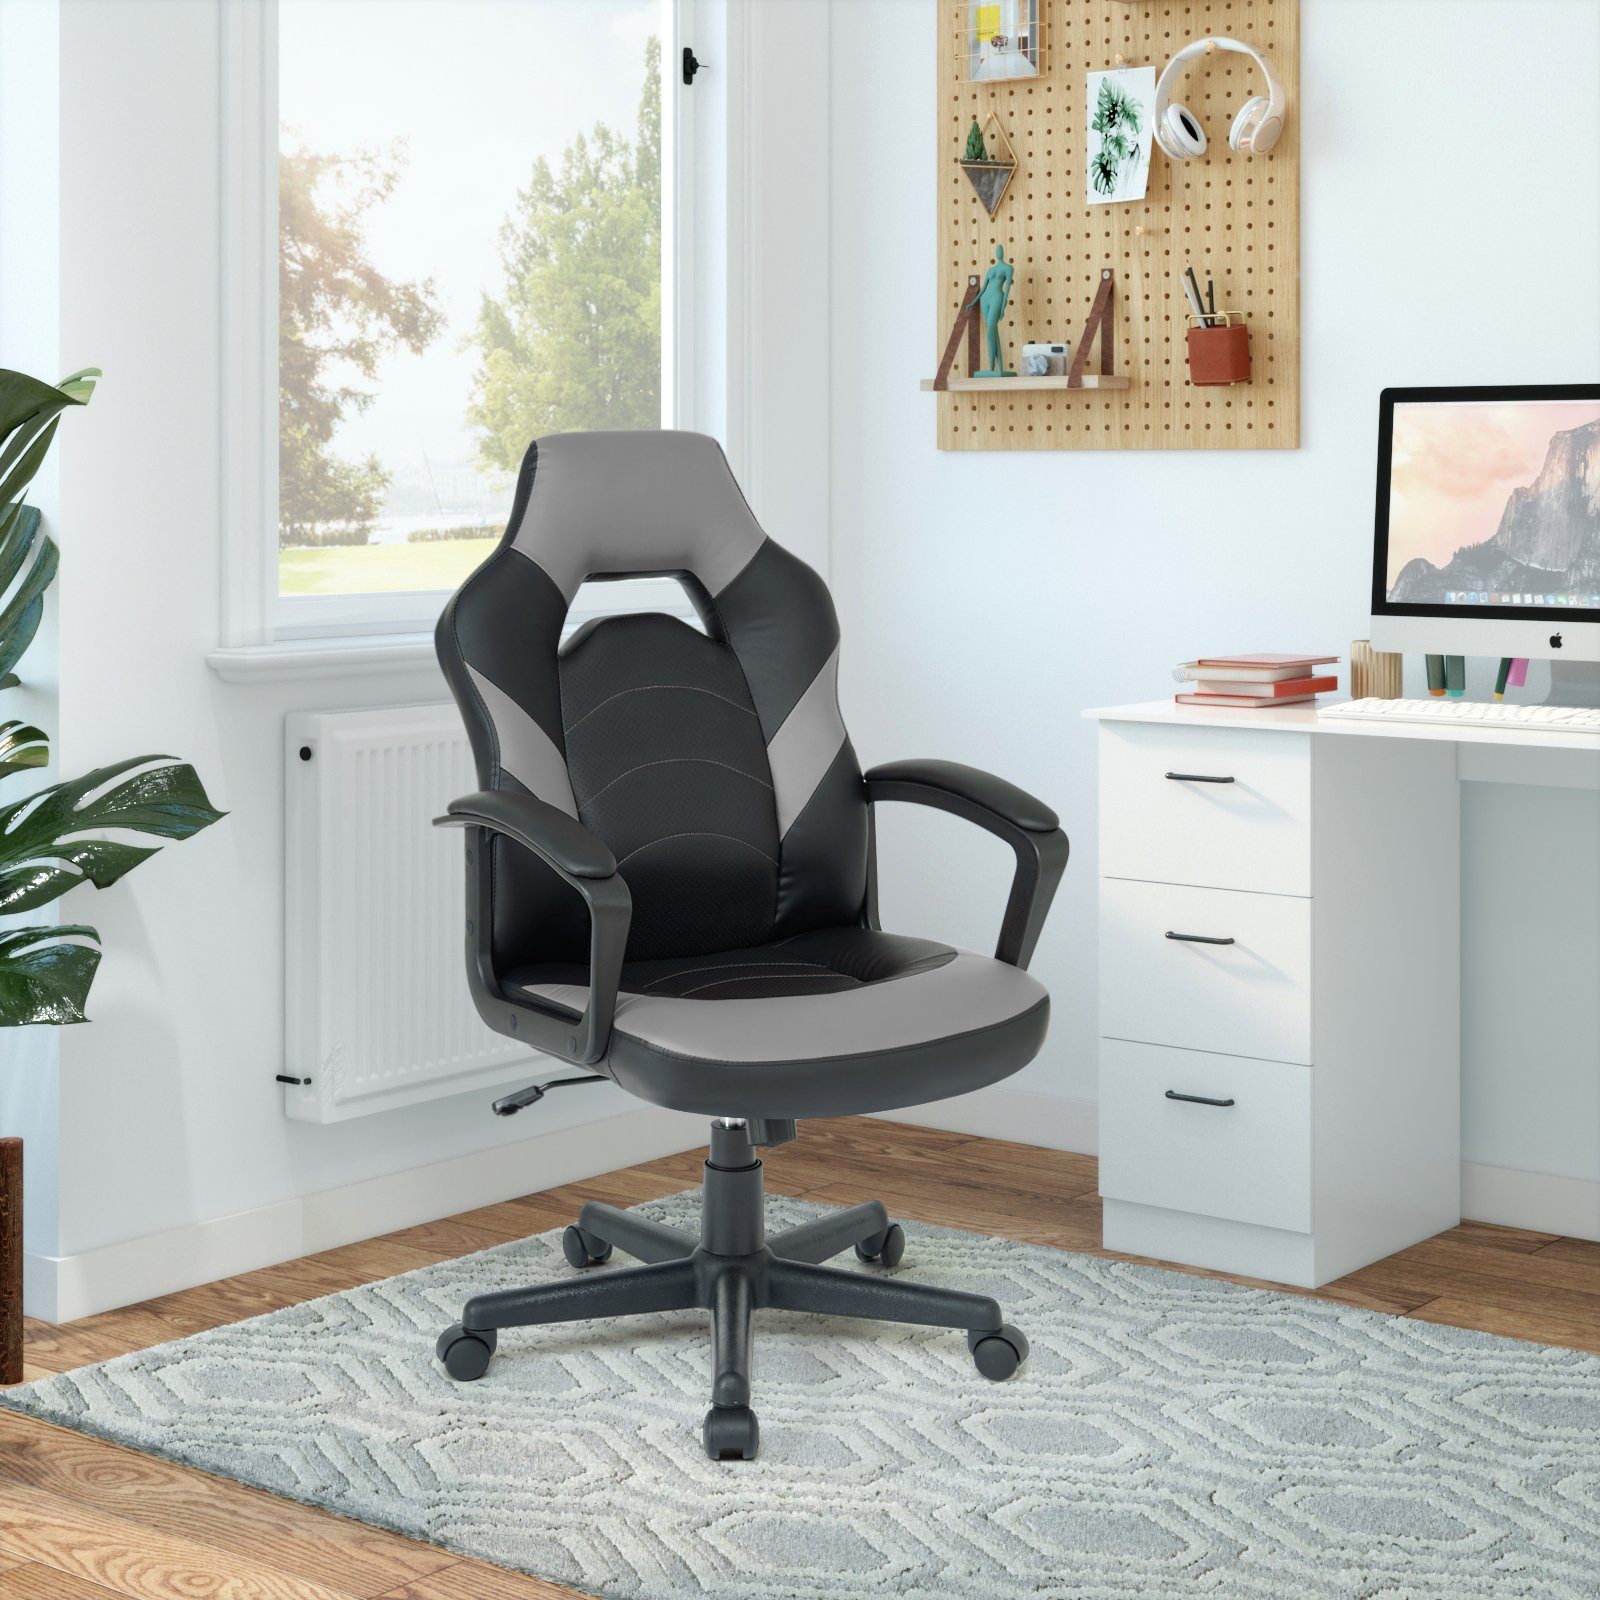 Intimate WM Heart Office grau Home Chair Gaming Bürostuhl,Computerstuhl